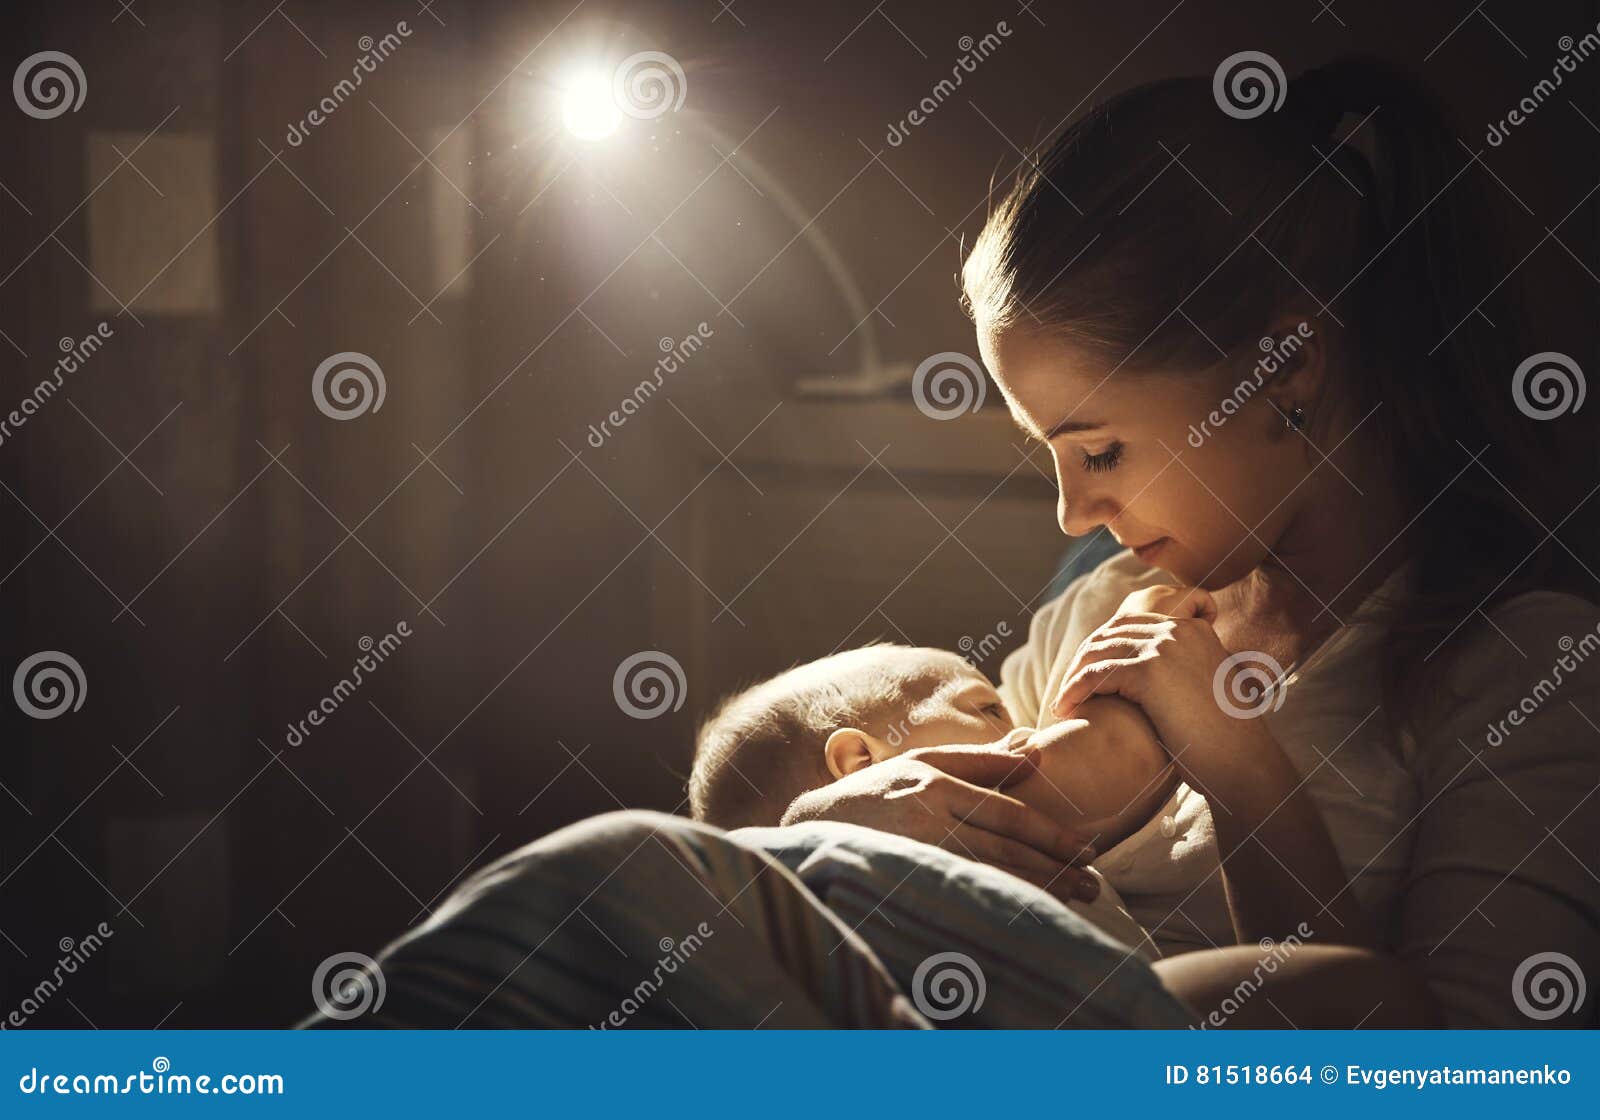 breastfeeding. mother feeding baby breast in bed dark night